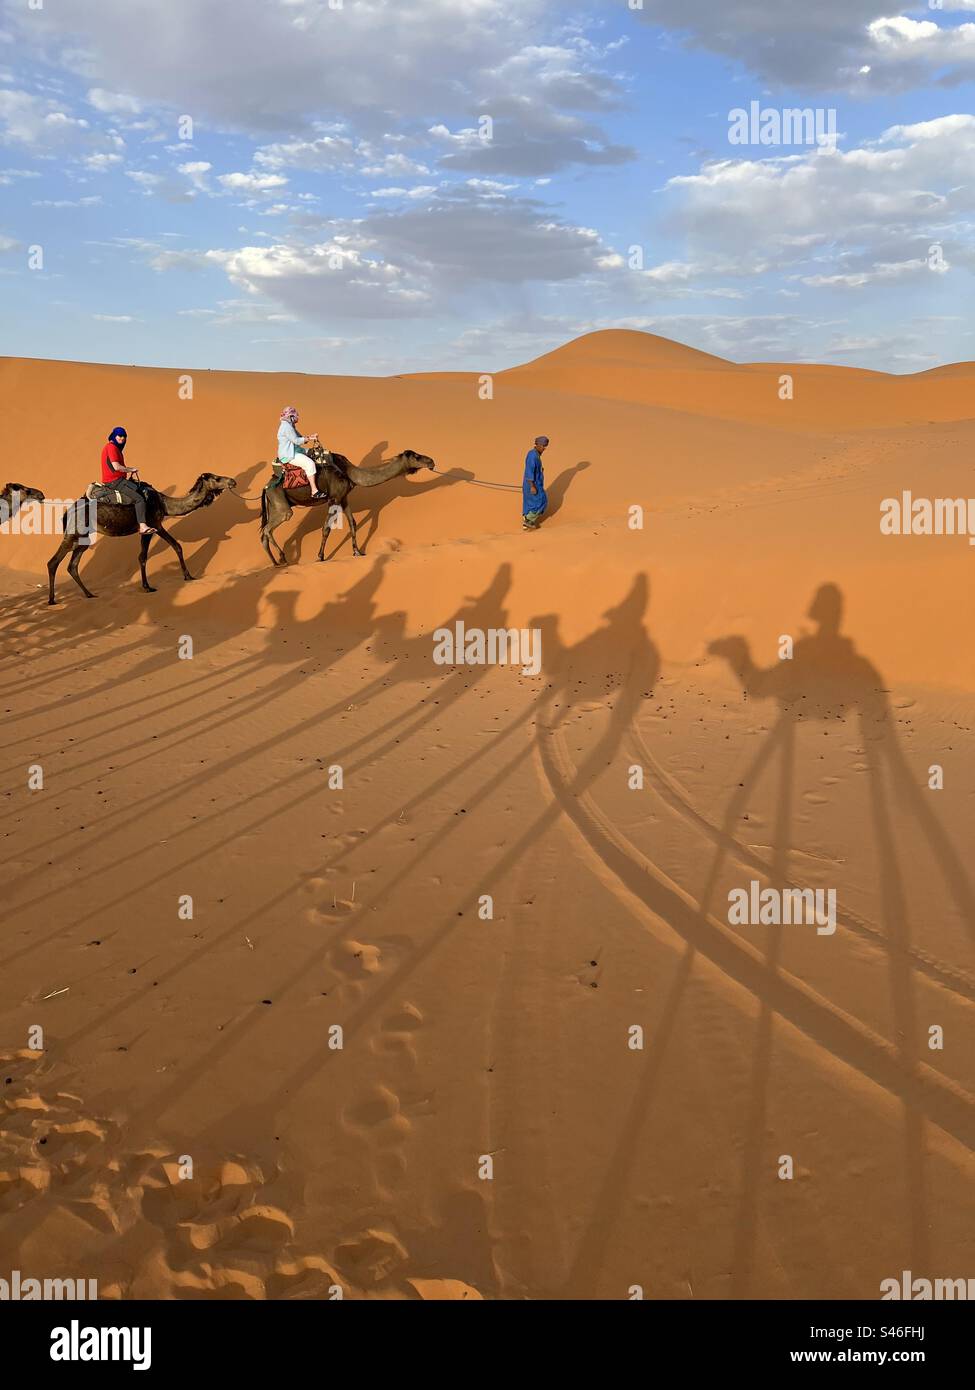 Sahara desert, camel ride on dunes, Morocco Stock Photo